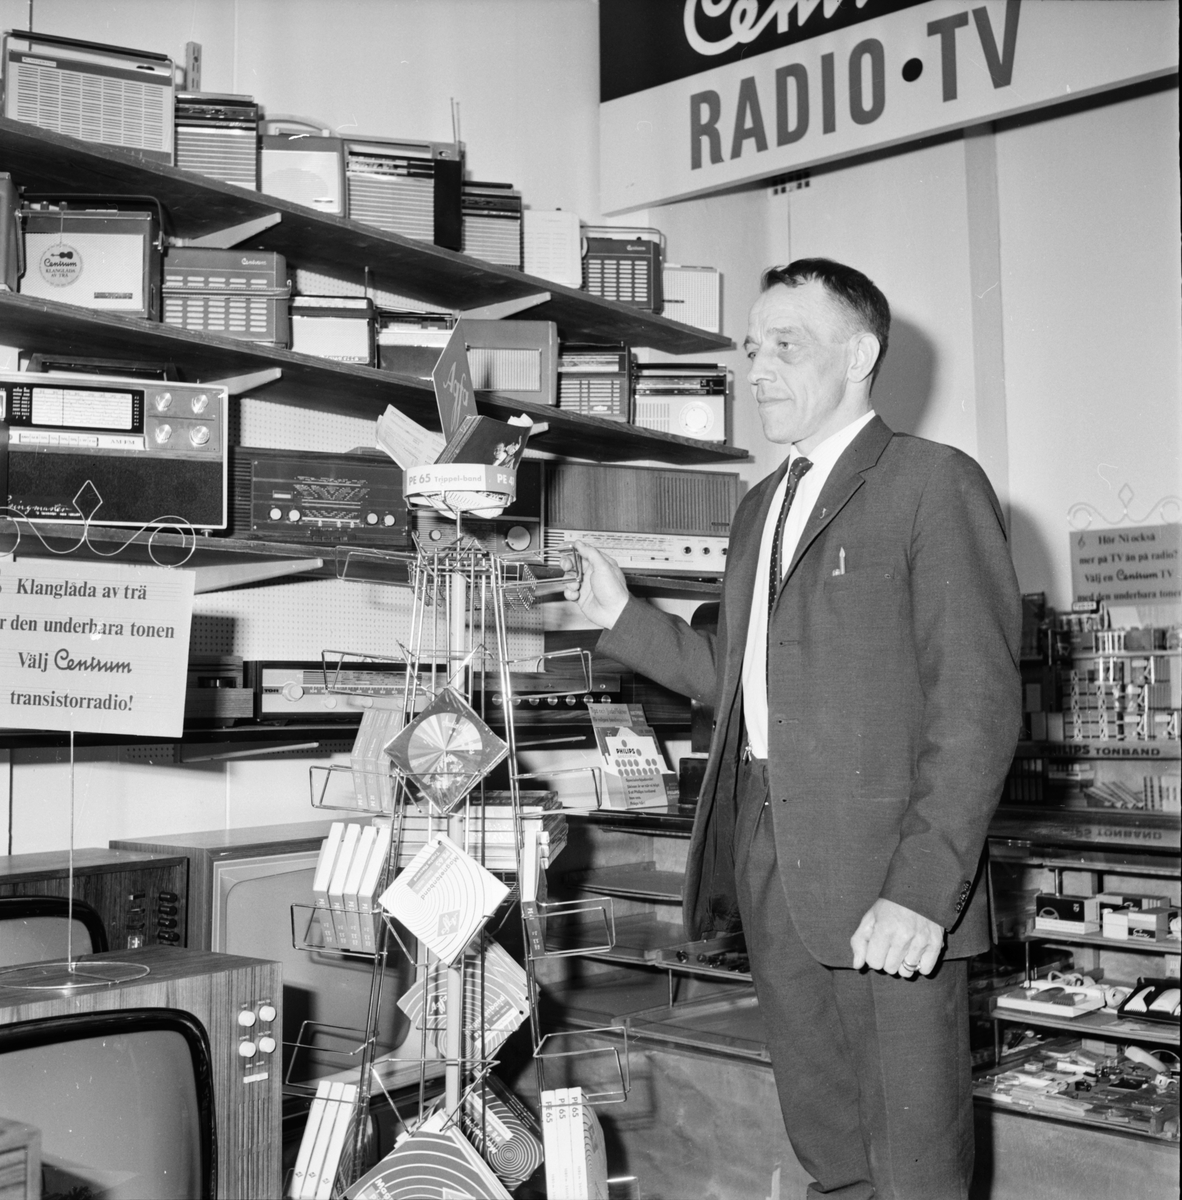 Thores Radio TV,
16 Maj 1966